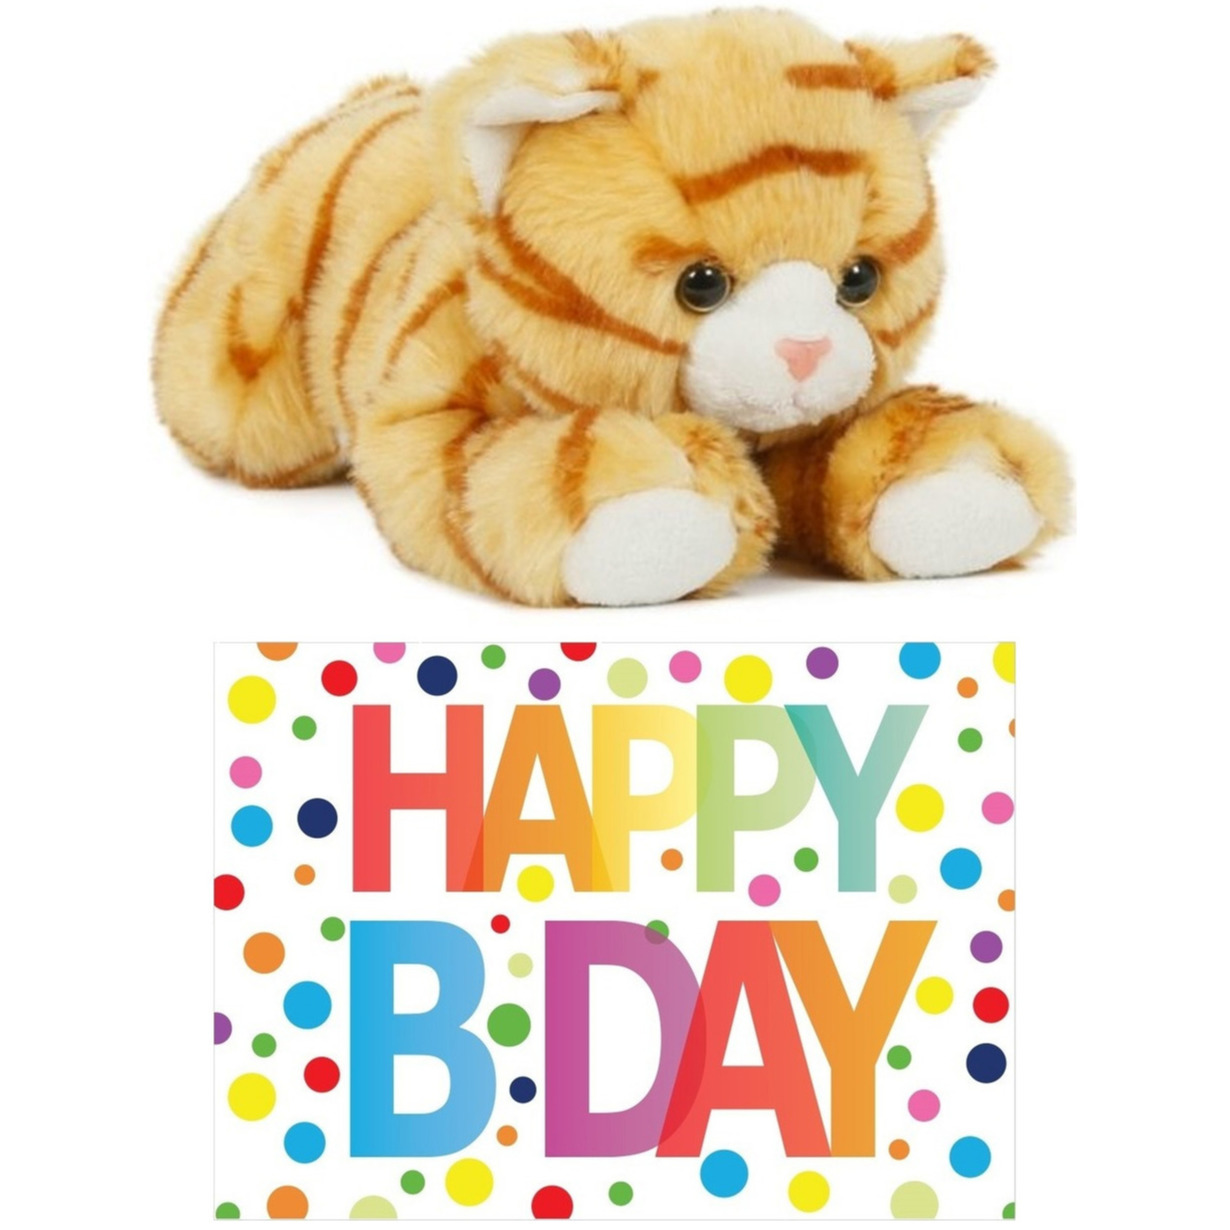 Cadeau setje pluche rood-witte kat-poes knuffel 25 cm met Happy Birthday wenskaart